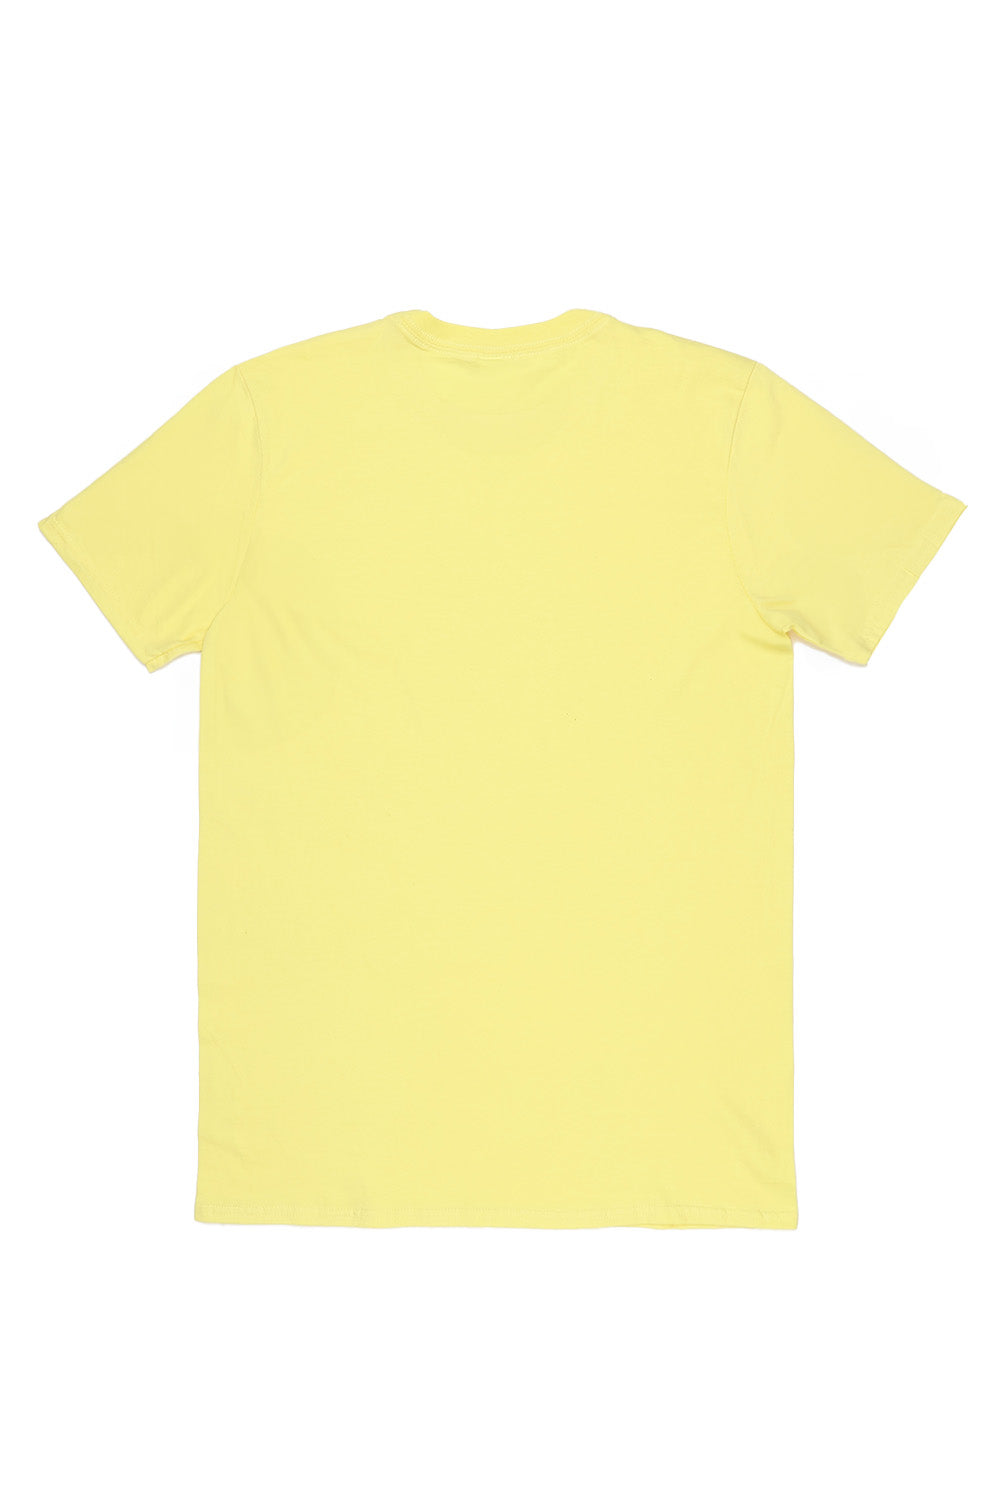 Santa Monica T-Shirt in Yellow (Custom Packs)